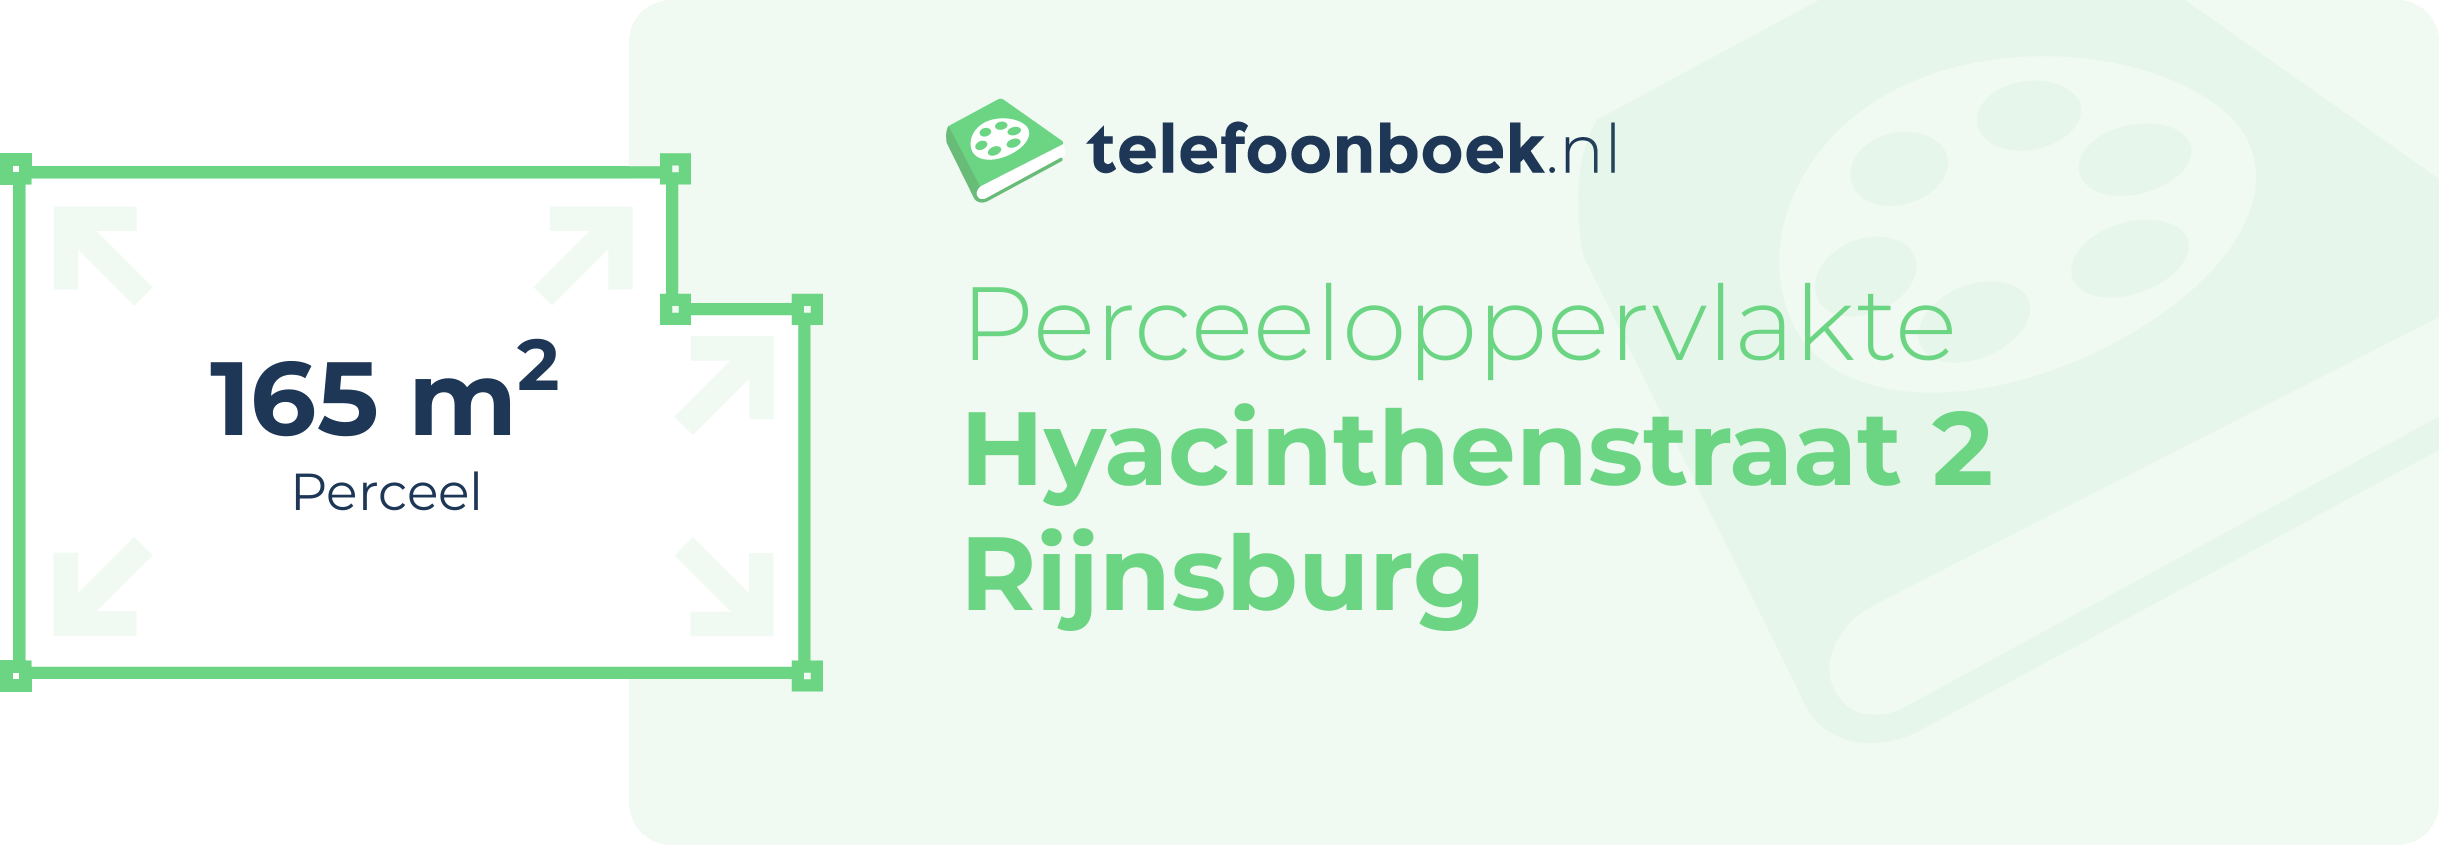 Perceeloppervlakte Hyacinthenstraat 2 Rijnsburg